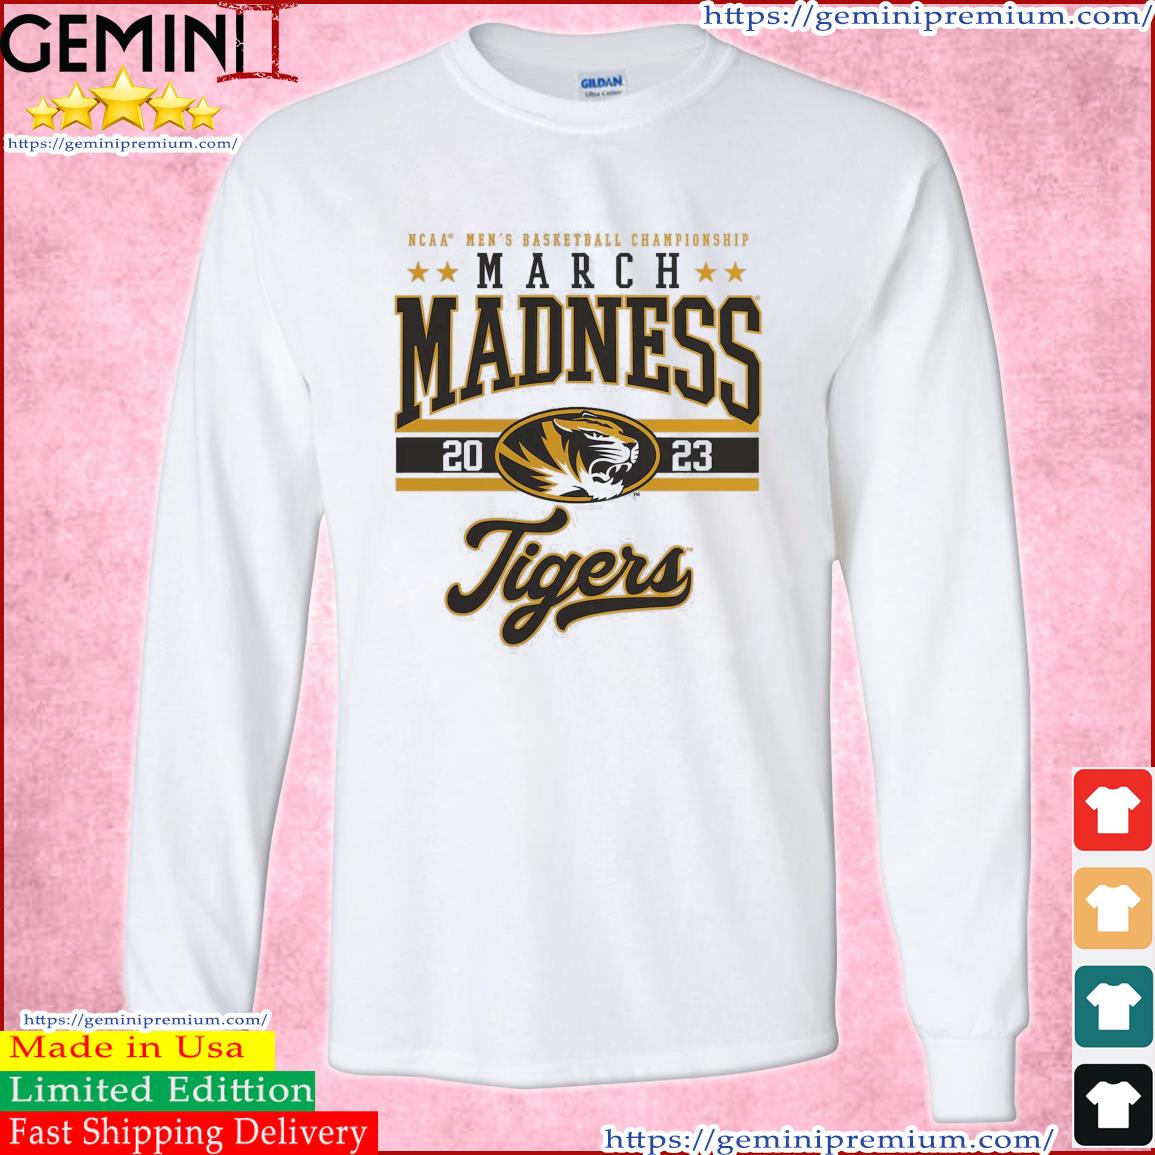 Missouri Tigers NCAA Men's Basketball Tournament March Madness 2023 Shirt Long Sleeve Tee